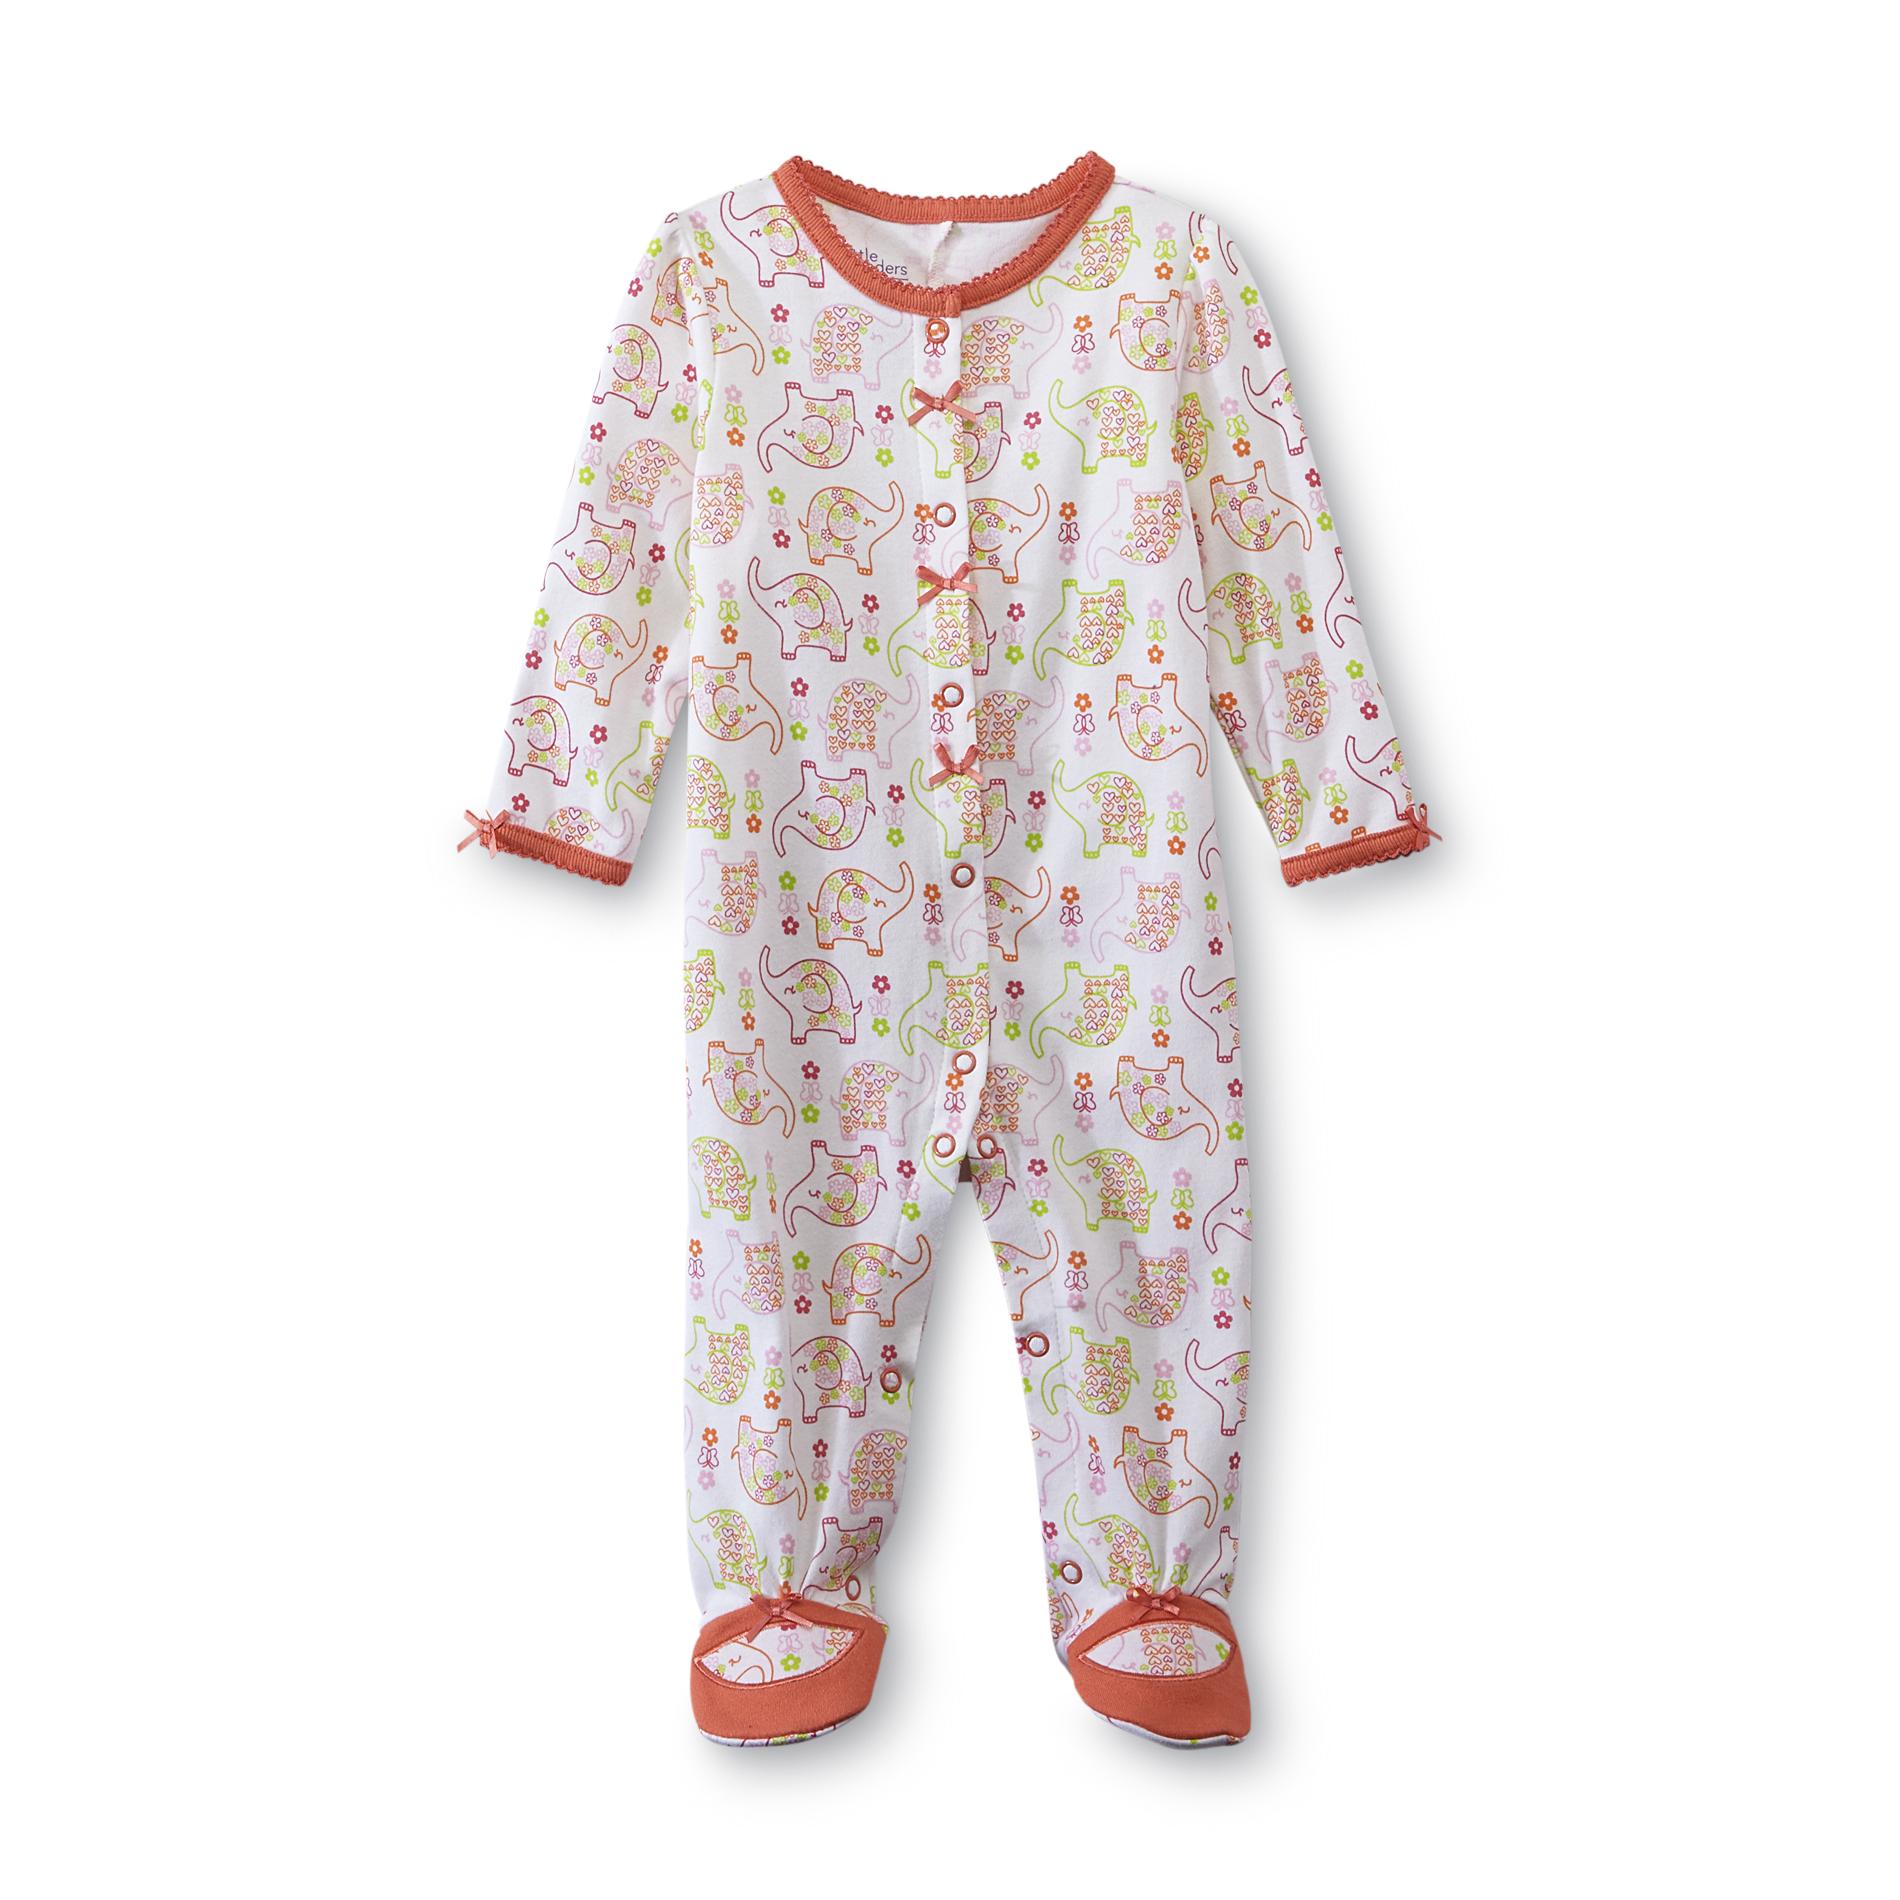 Little Wonders Newborn Girl's Footed Sleeper Pajamas - Elephants